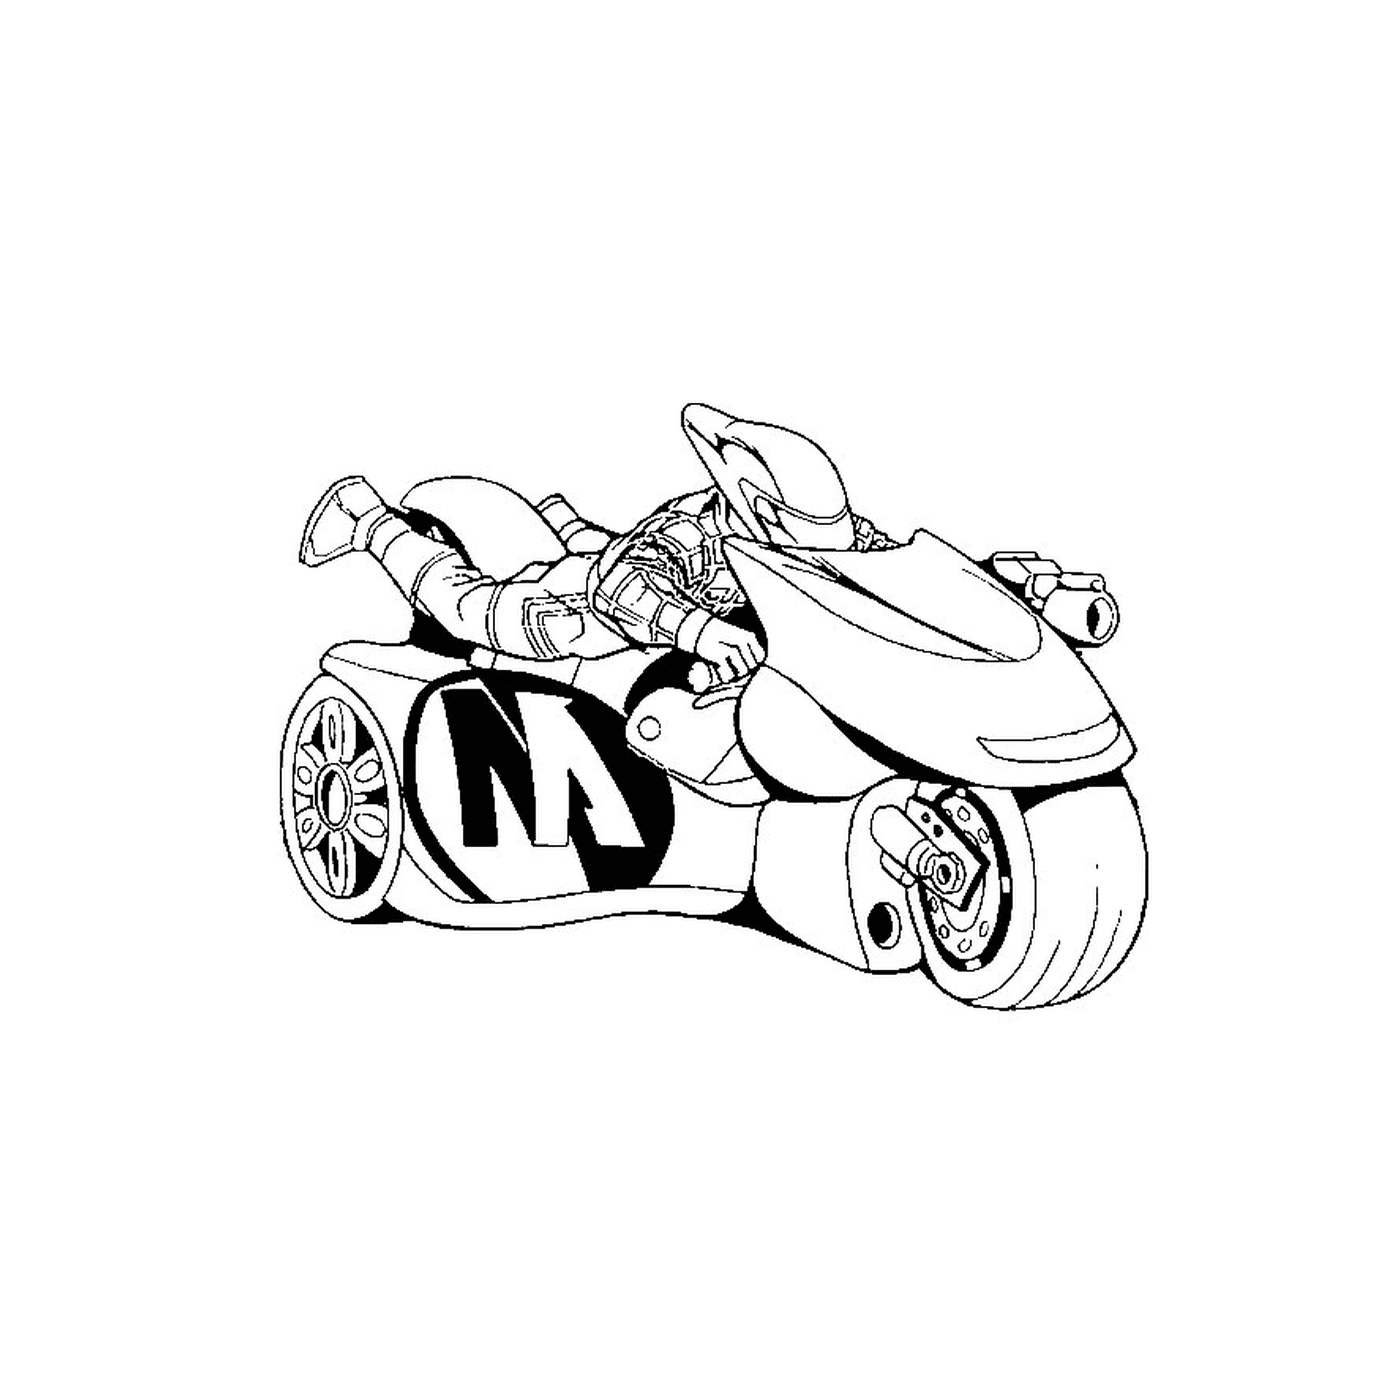   Une moto de Batman 